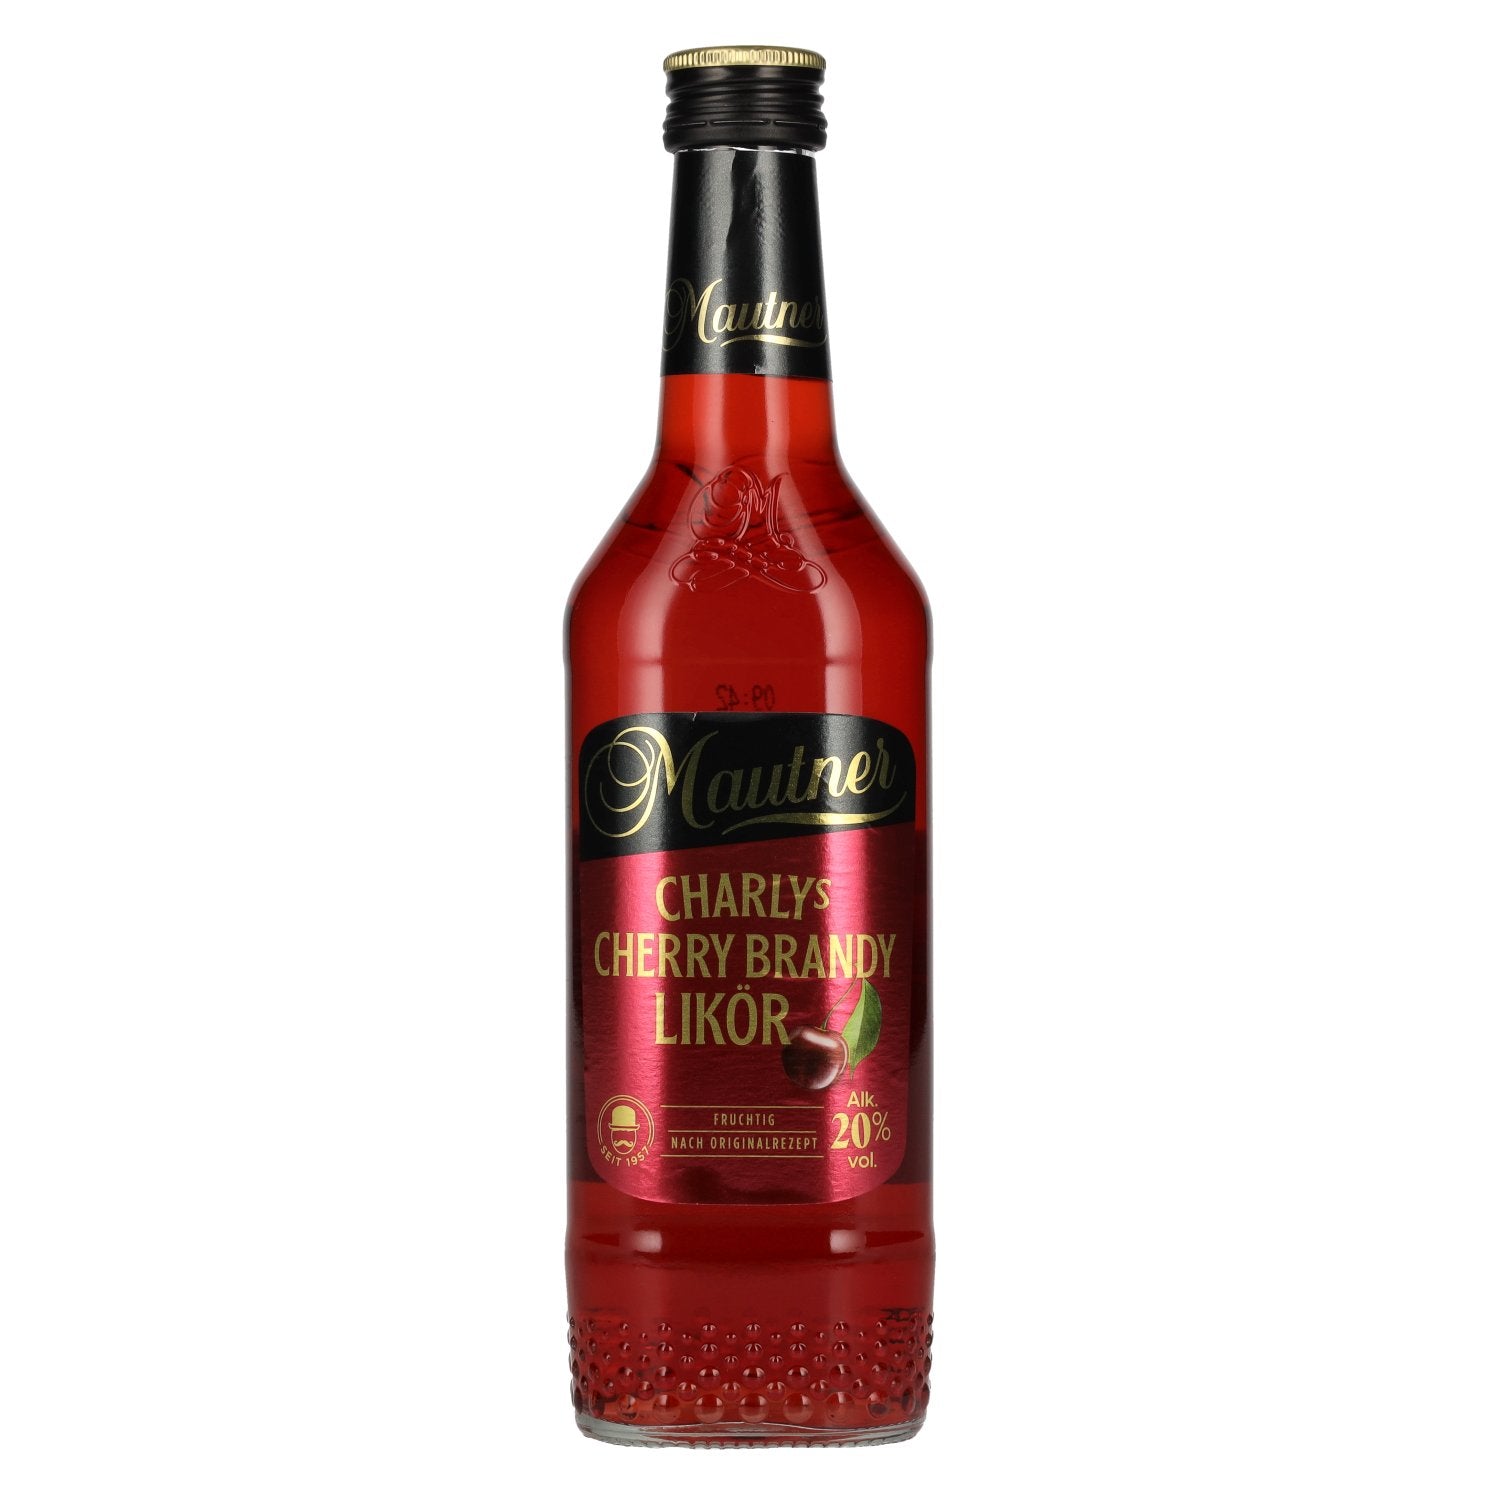 Mautner Charly's Cherry Brandy Likoer 20% Vol. 0,35l